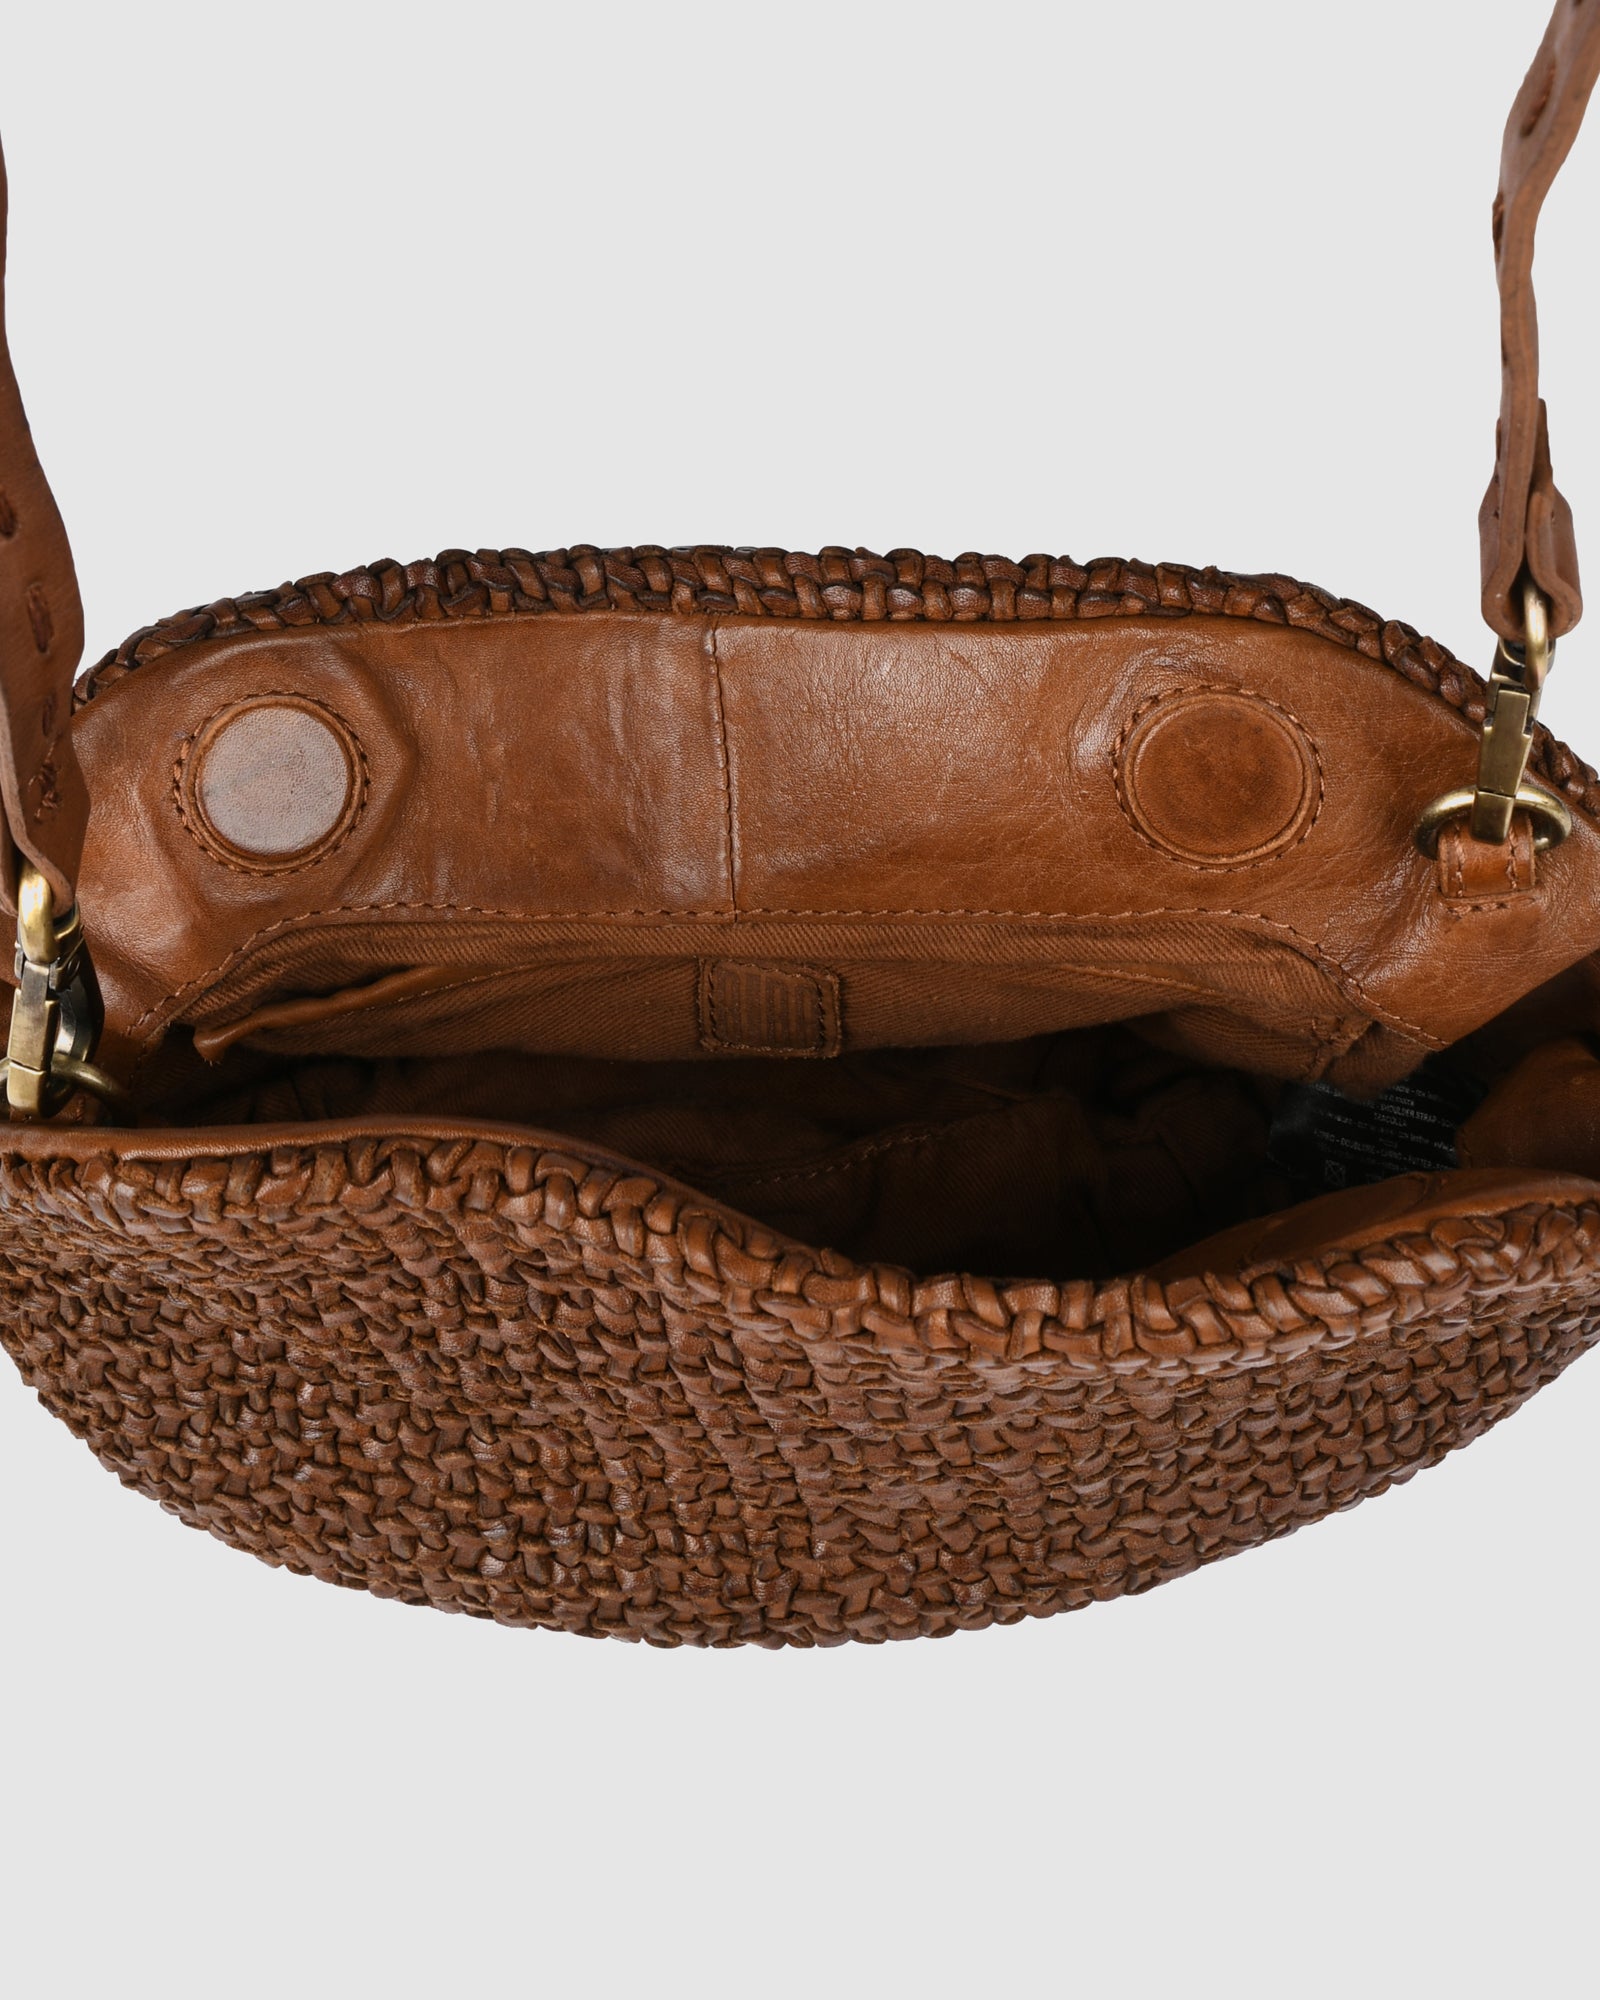 Shop Biba Women's Leather Crossbody Bags up to 70% Off | DealDoodle